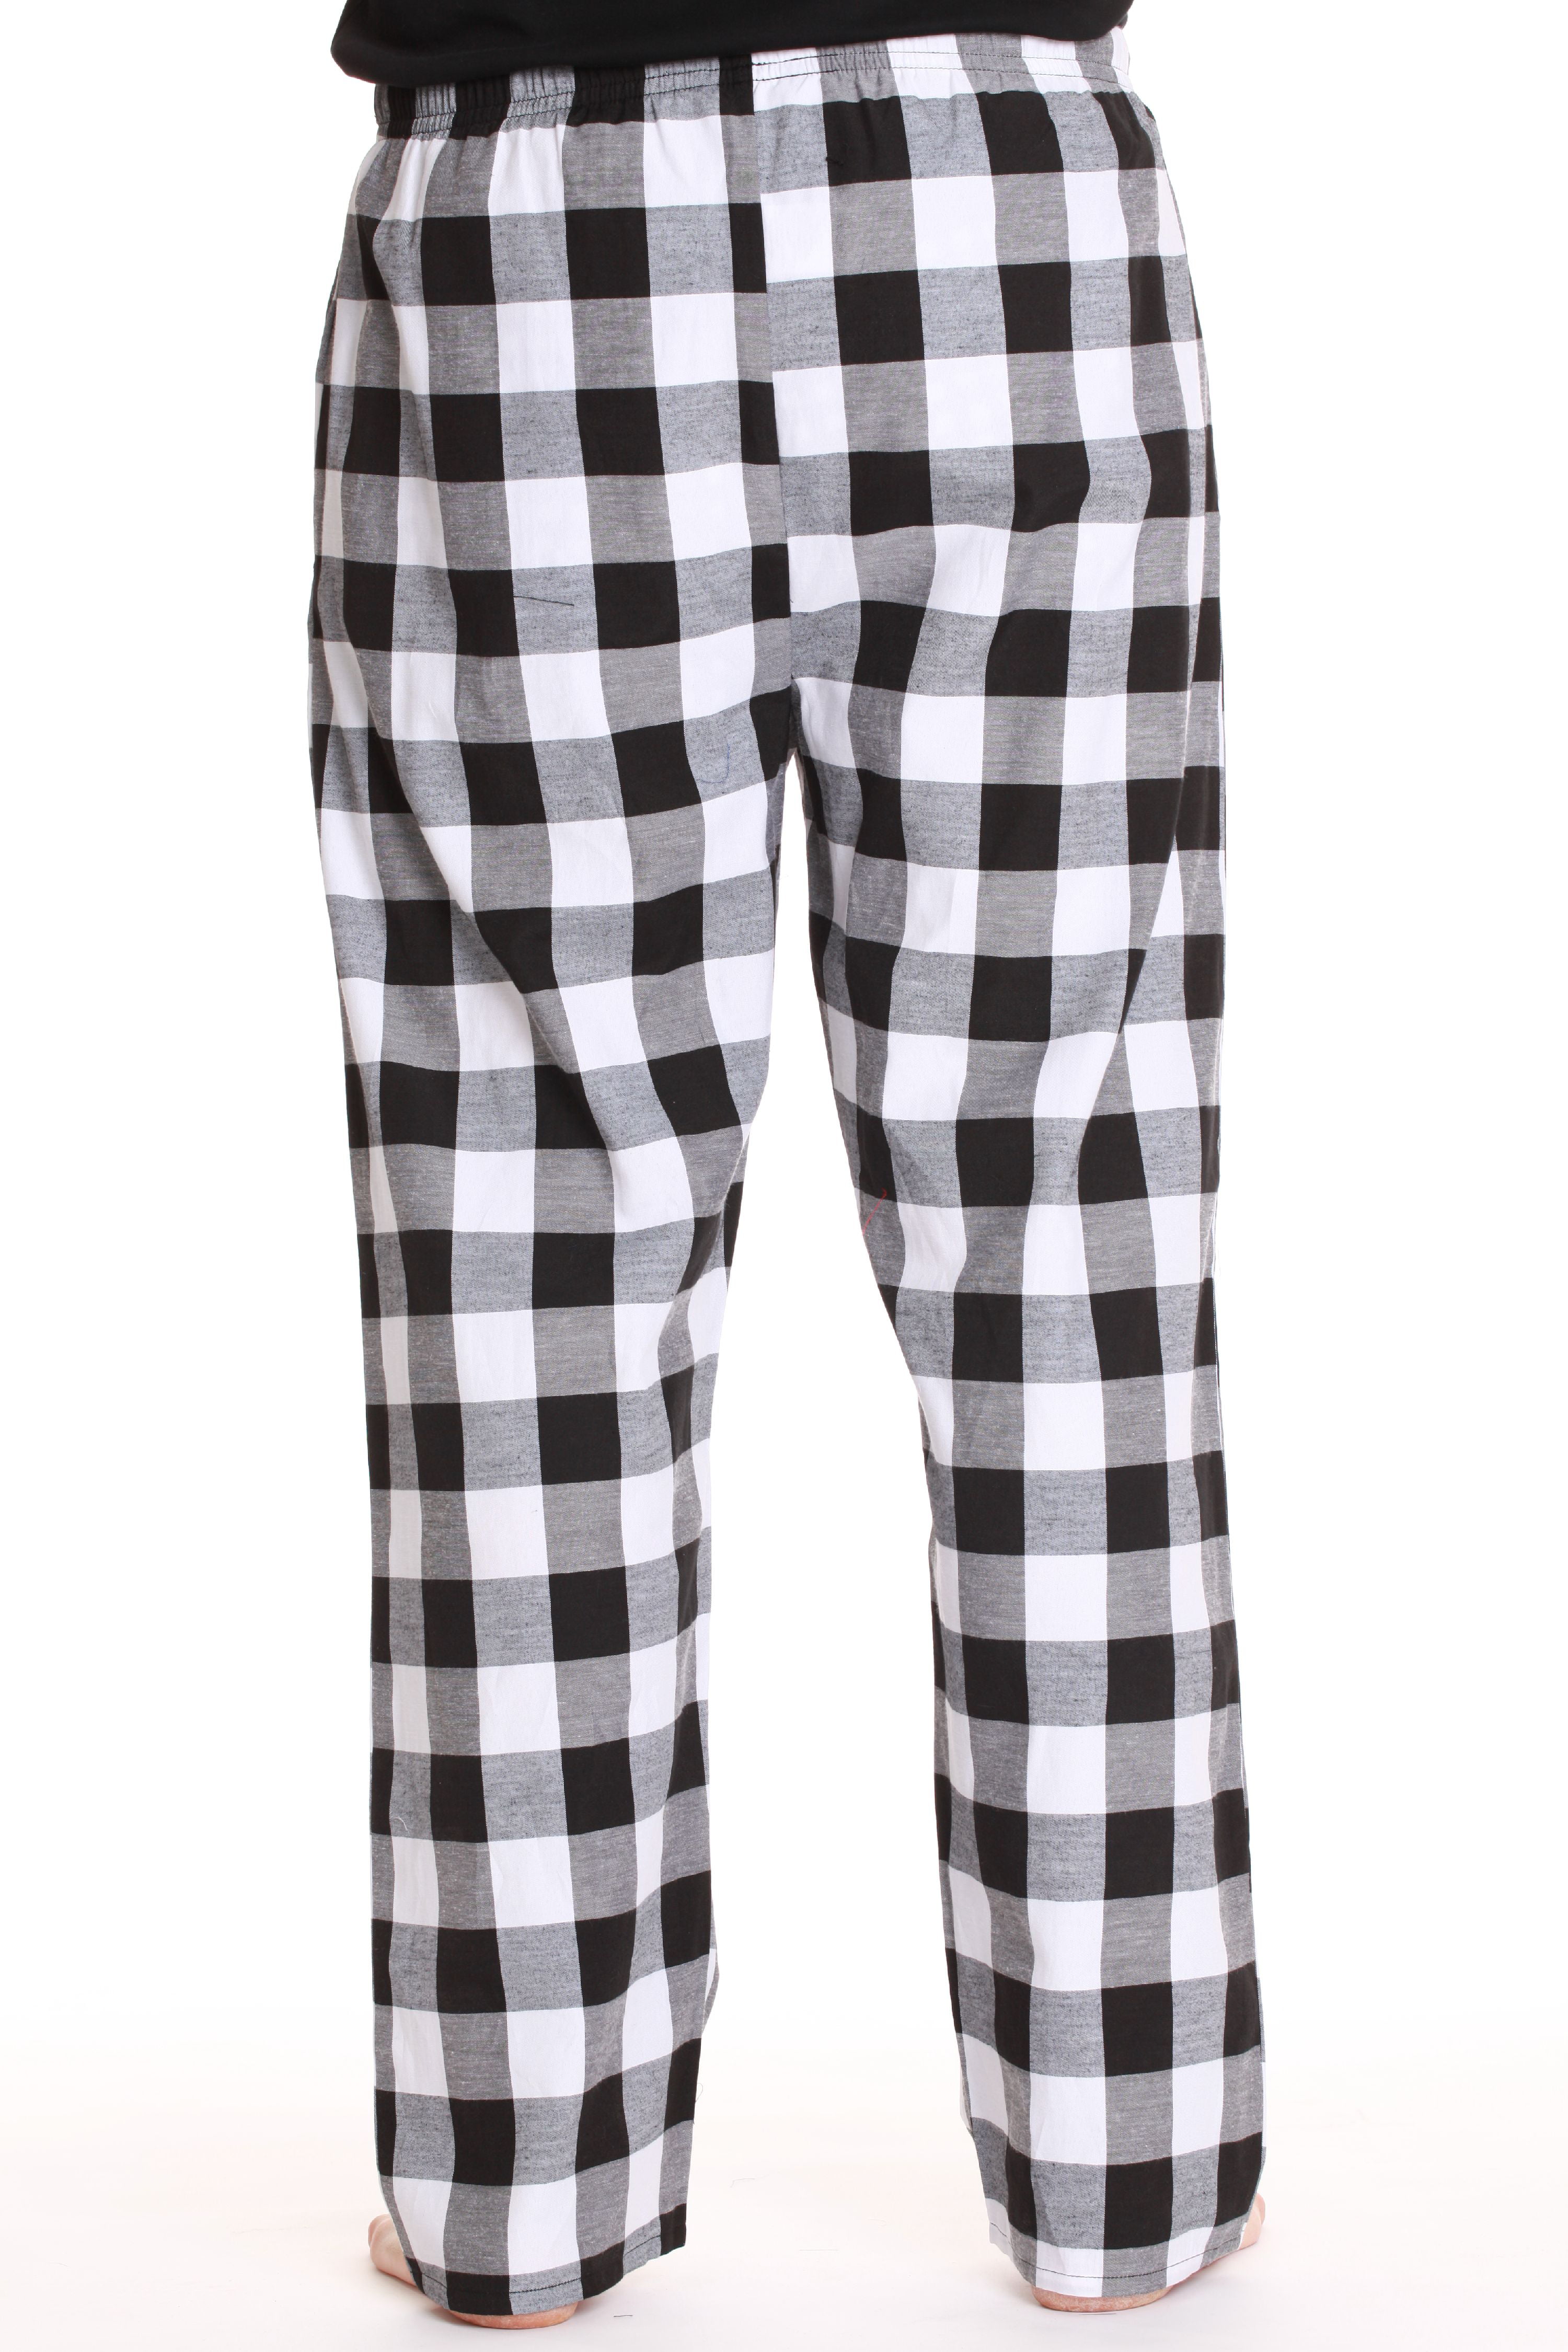 Men's Medium Wondershop Target Black & White Plaid Pajama Pants